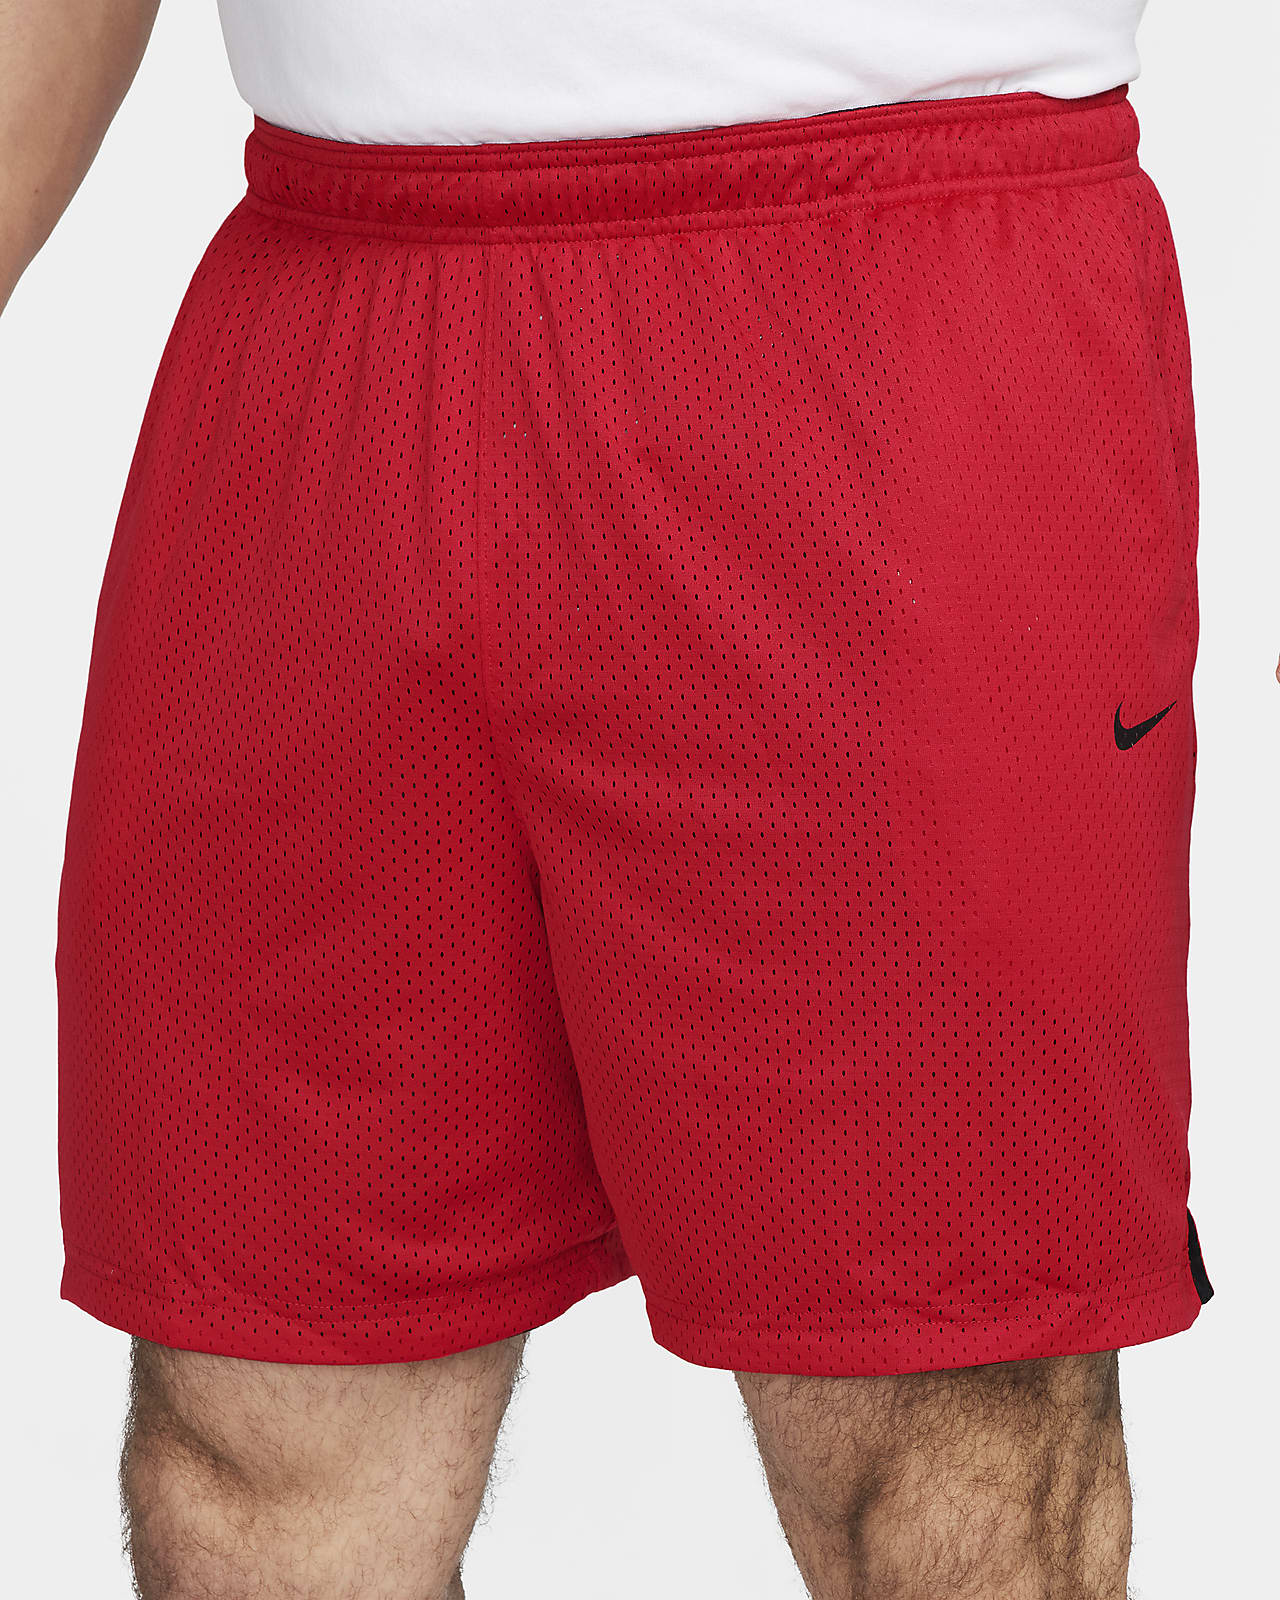 Nike Authentics Men's Practice jersey.